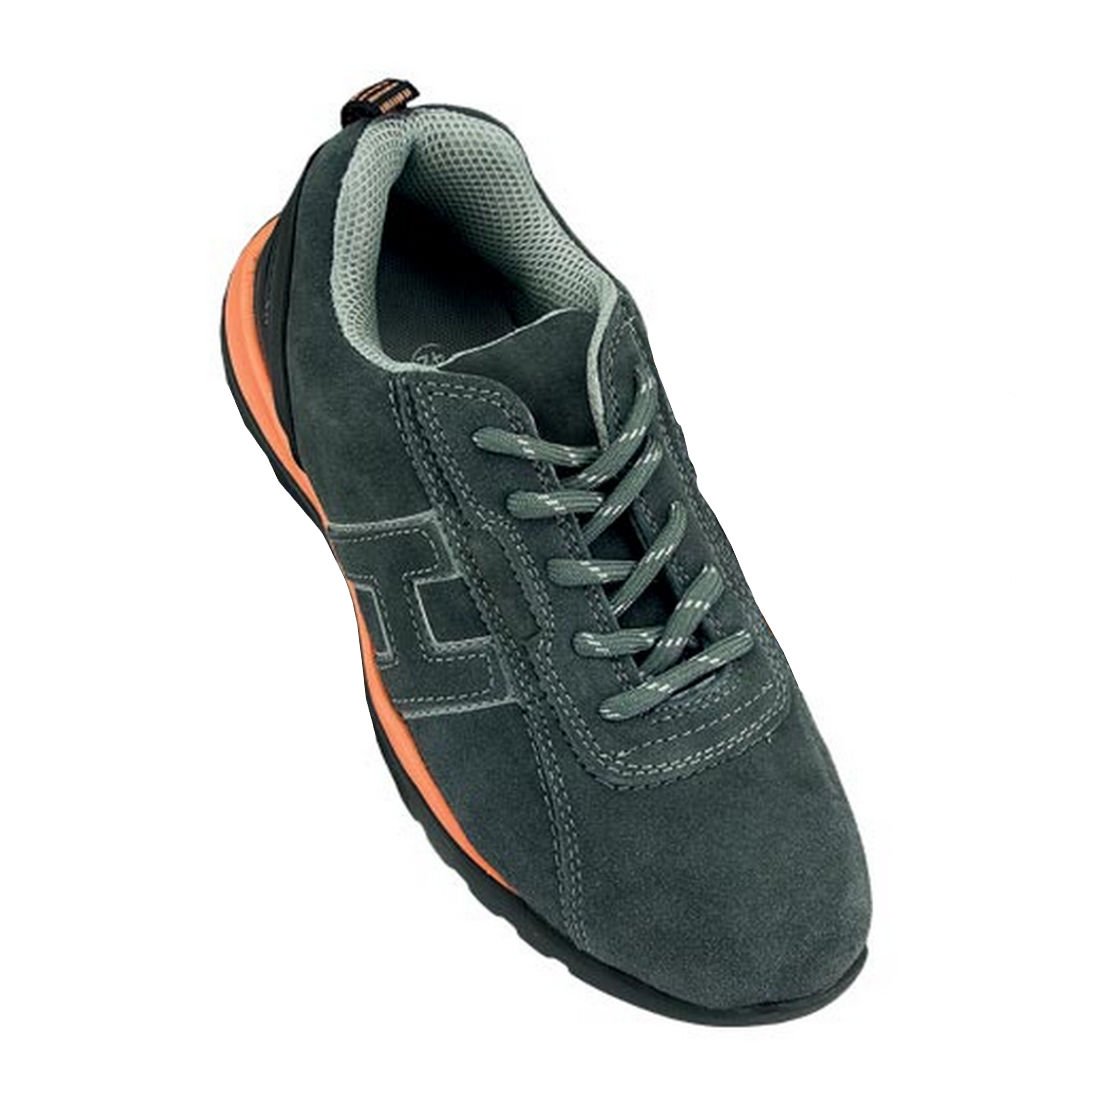 Reis Brneutron39 Sichere Schuhe, Grau-Orange, 39 Größe